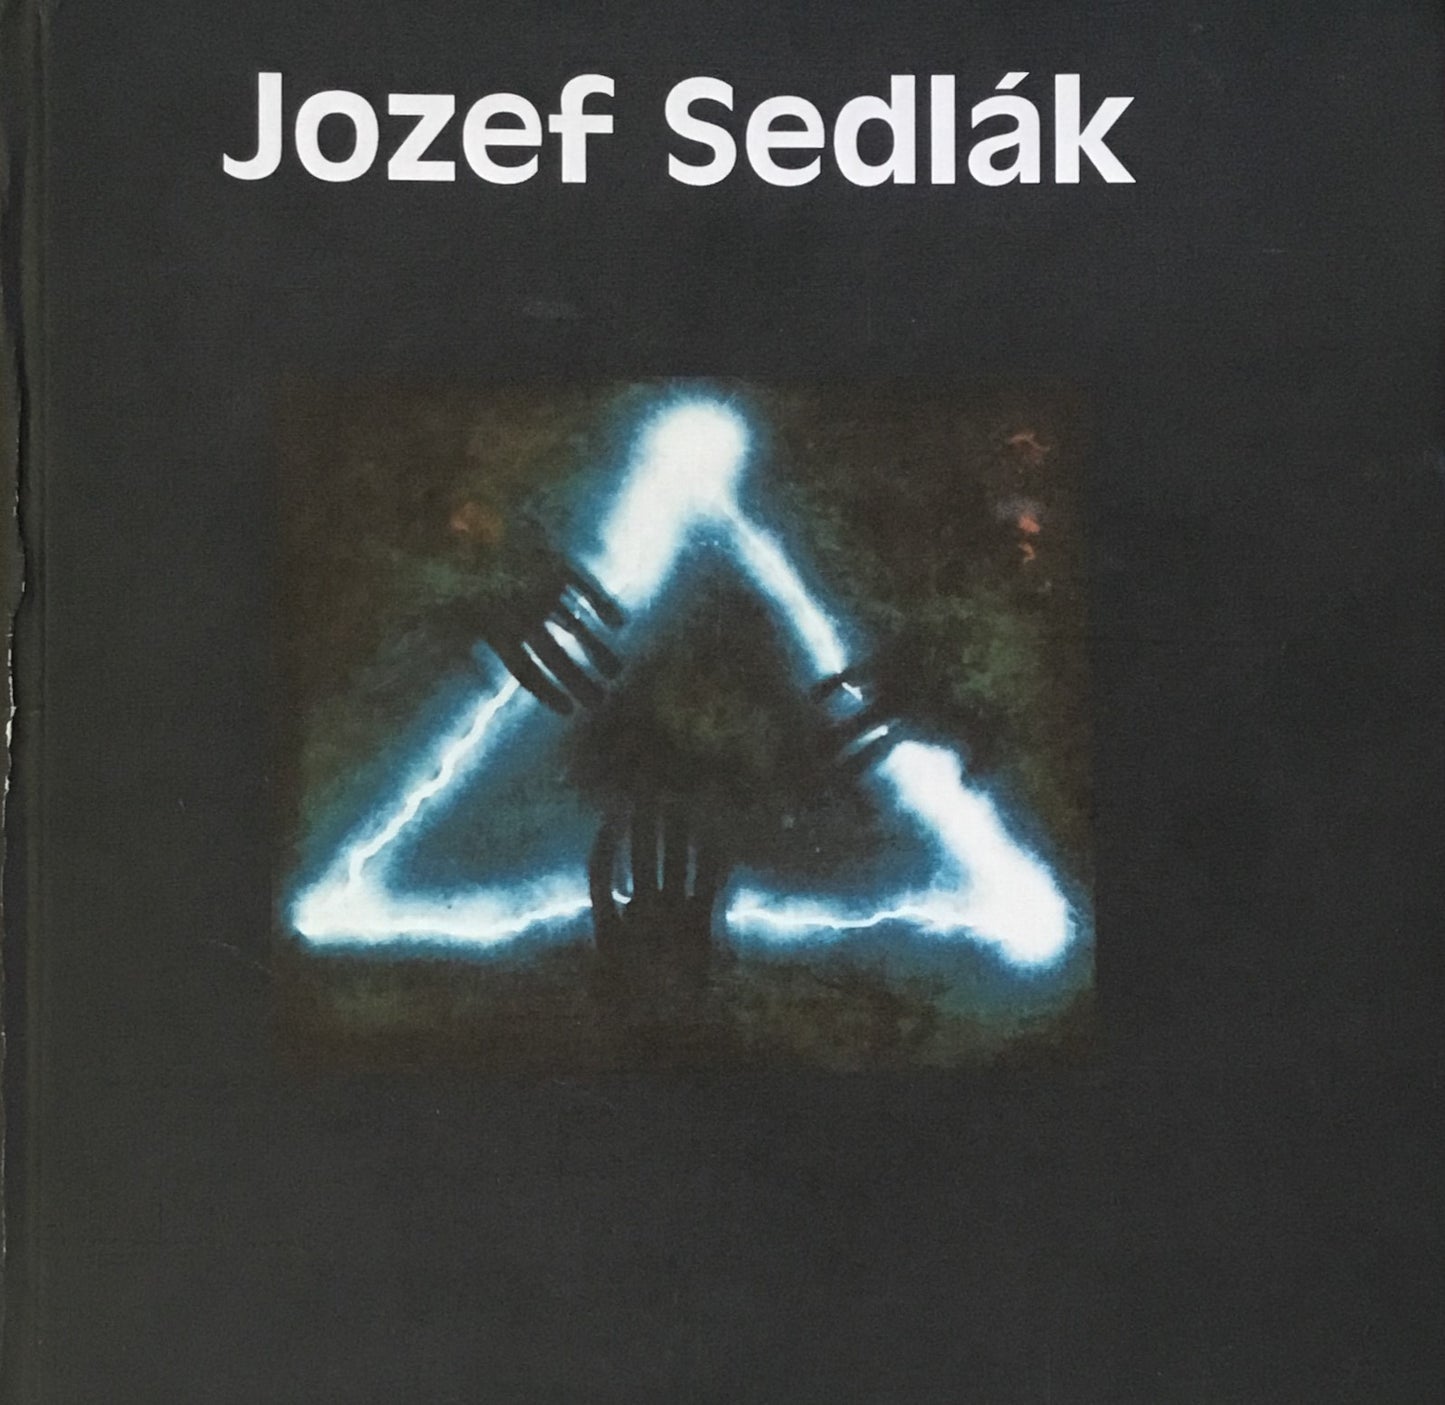 Jozef Sedlák　Václav Macek　ヨゼフ・セドラーク写真集